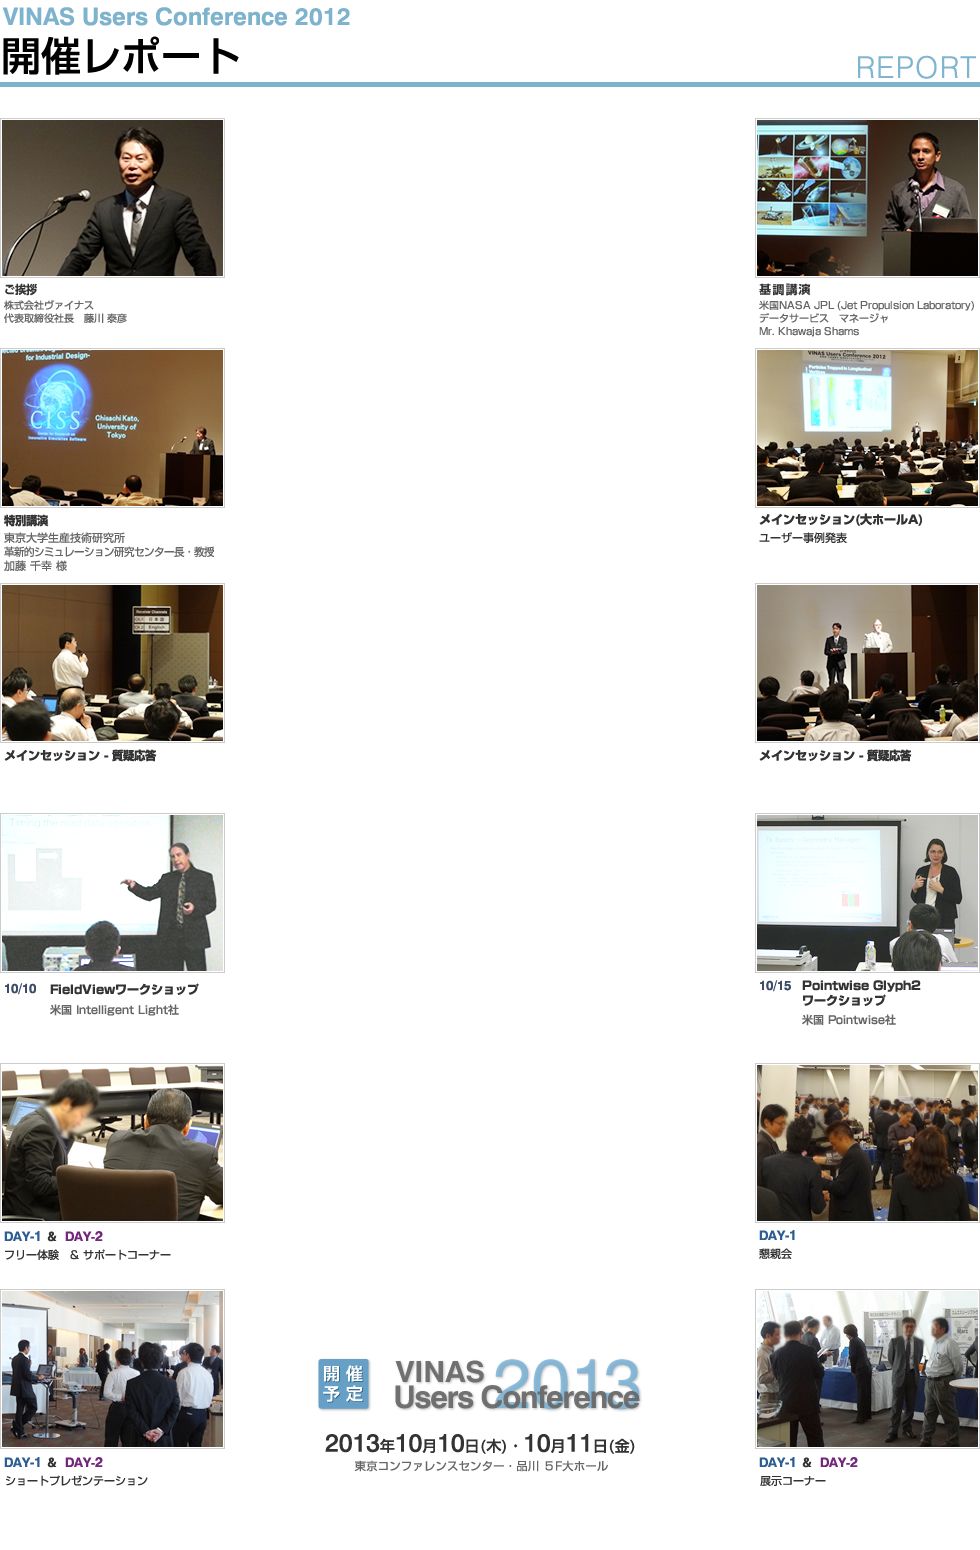 VINAS Users Conference 2012 開催レポート